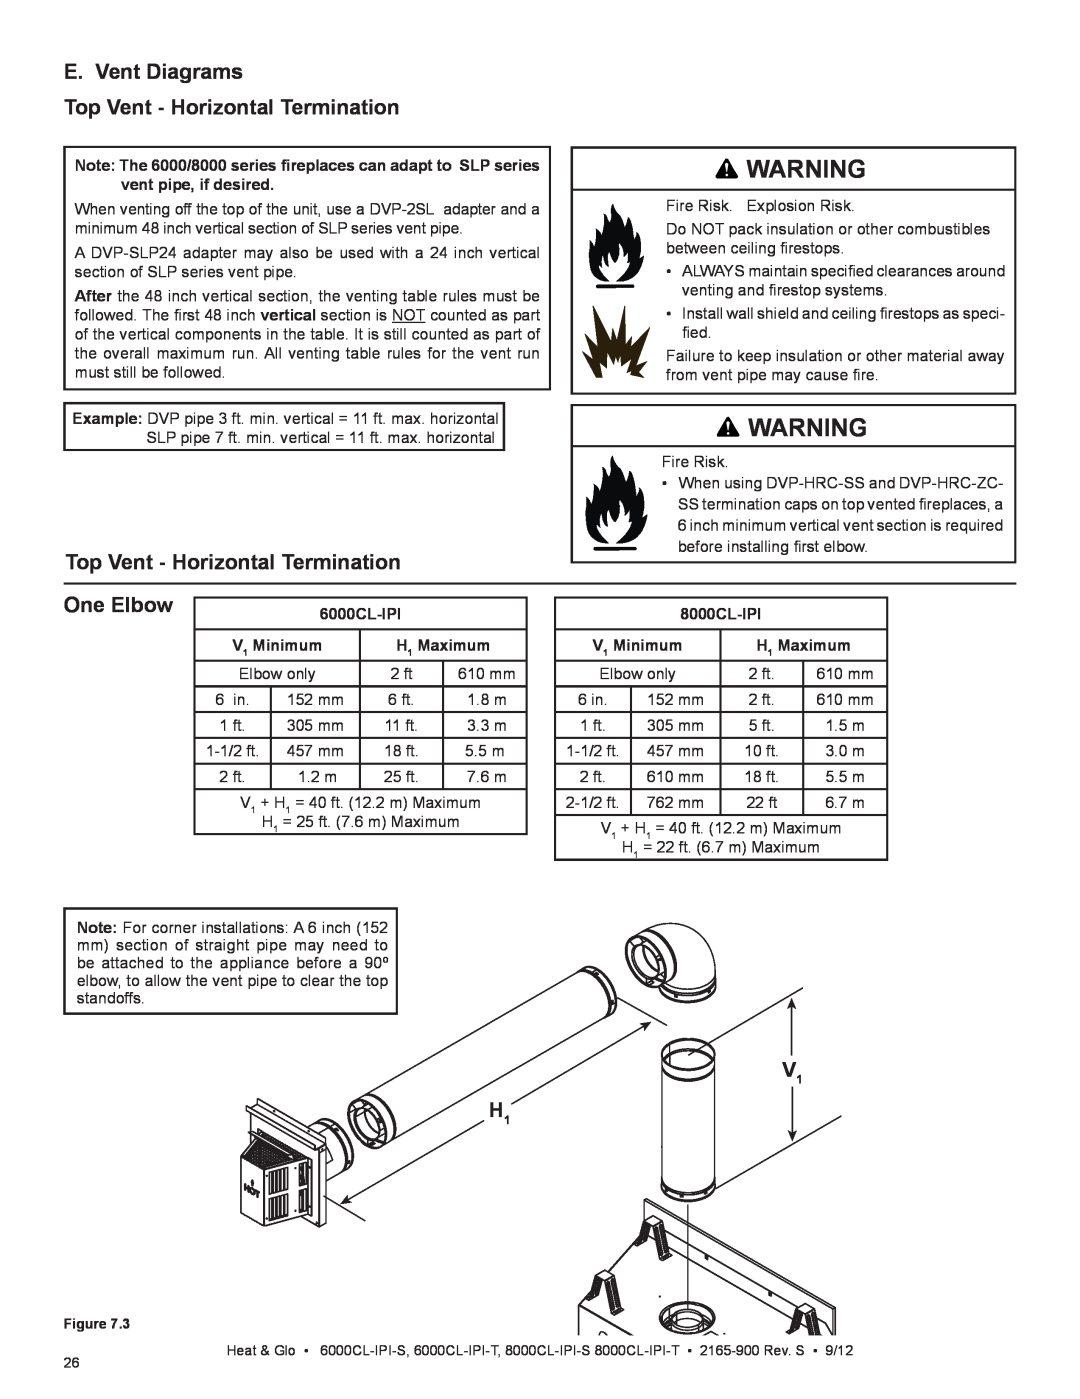 Heat & Glo LifeStyle 6000CL-IPI-S, 8000CL-IPI-S manual E. Vent Diagrams, Top Vent - Horizontal Termination, One Elbow 